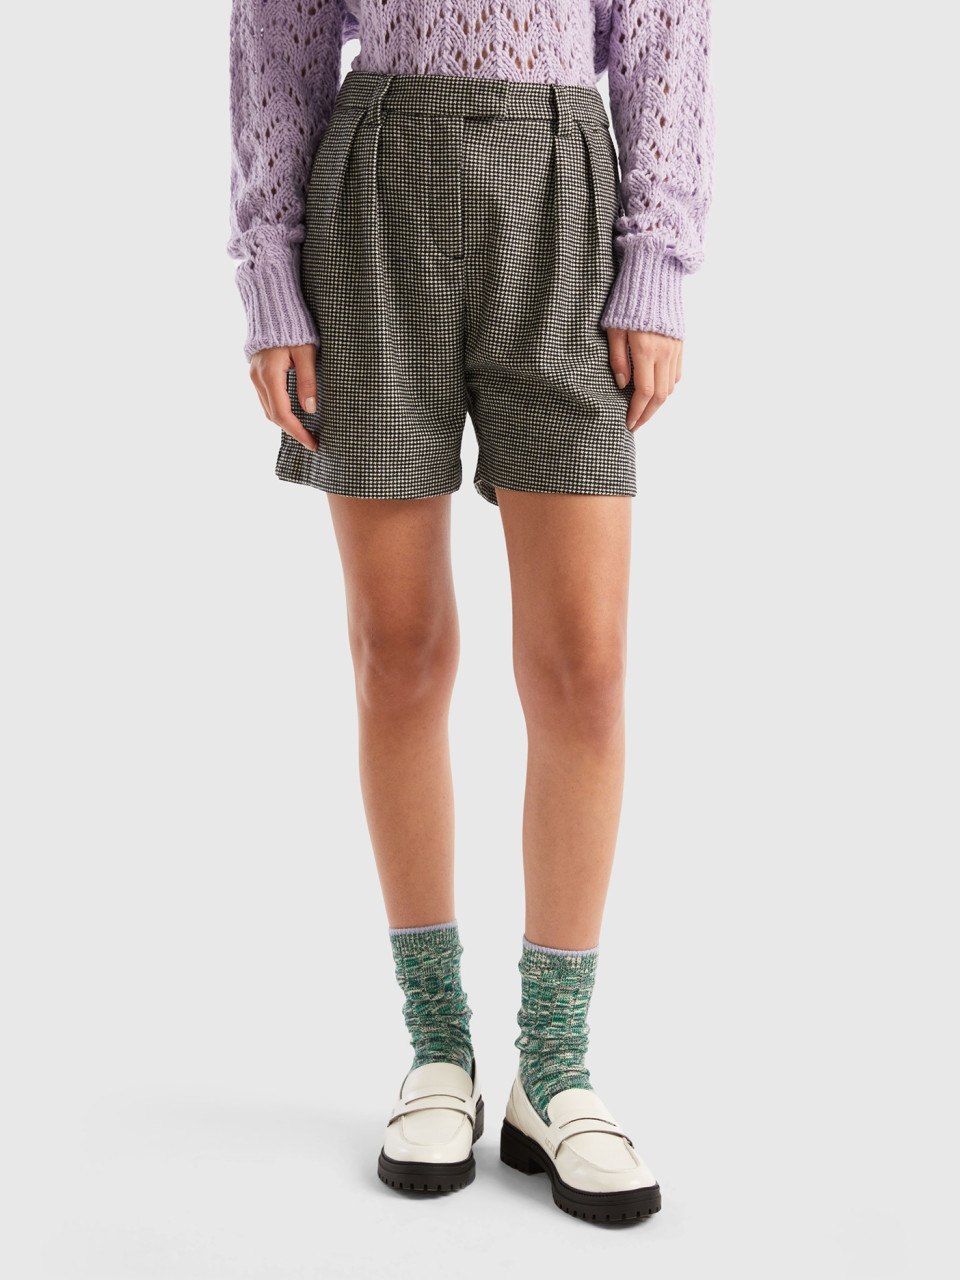 Benetton, Houndstooth Shorts, Gray, Women